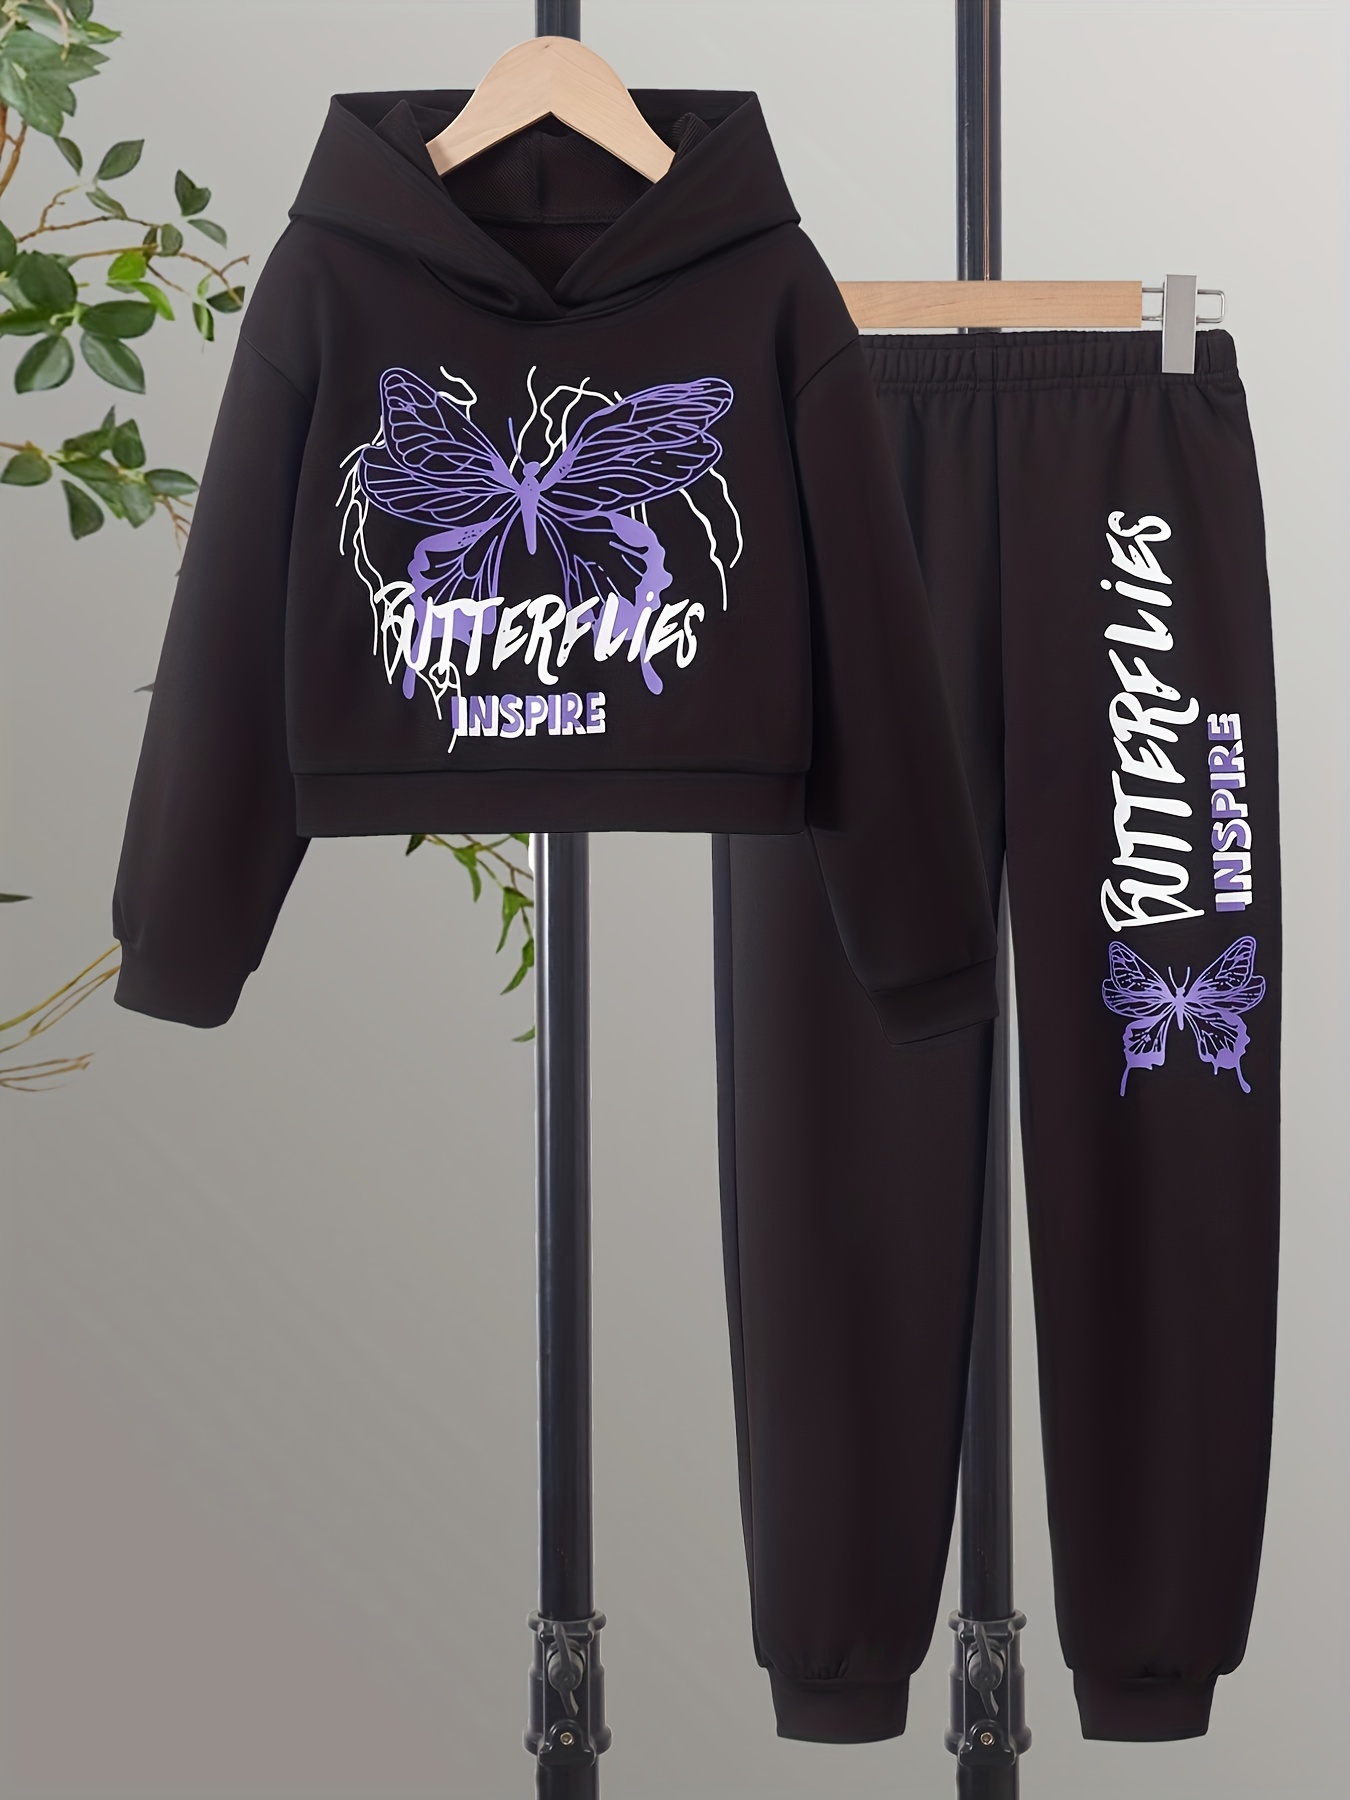 Butterflies Inspire Print Outfits Girls Cool Sets, Hoodies + Jogger Pants  Kids Gift Halloween